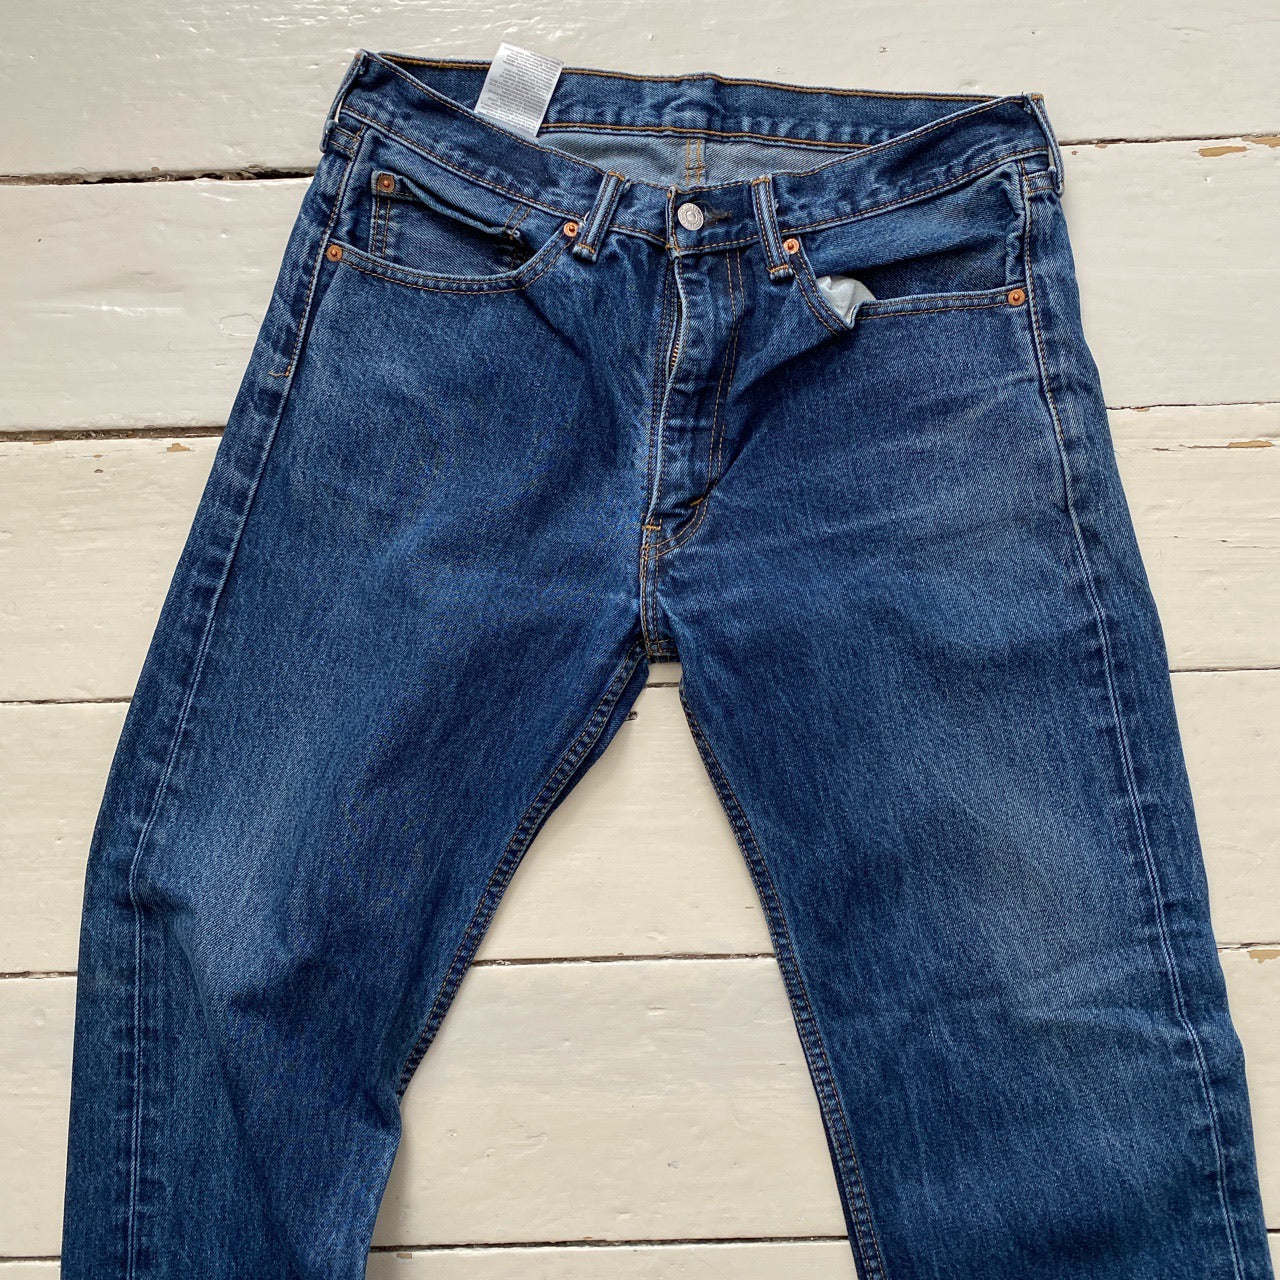 Levis 505 Stonewashed Jeans (34/31)